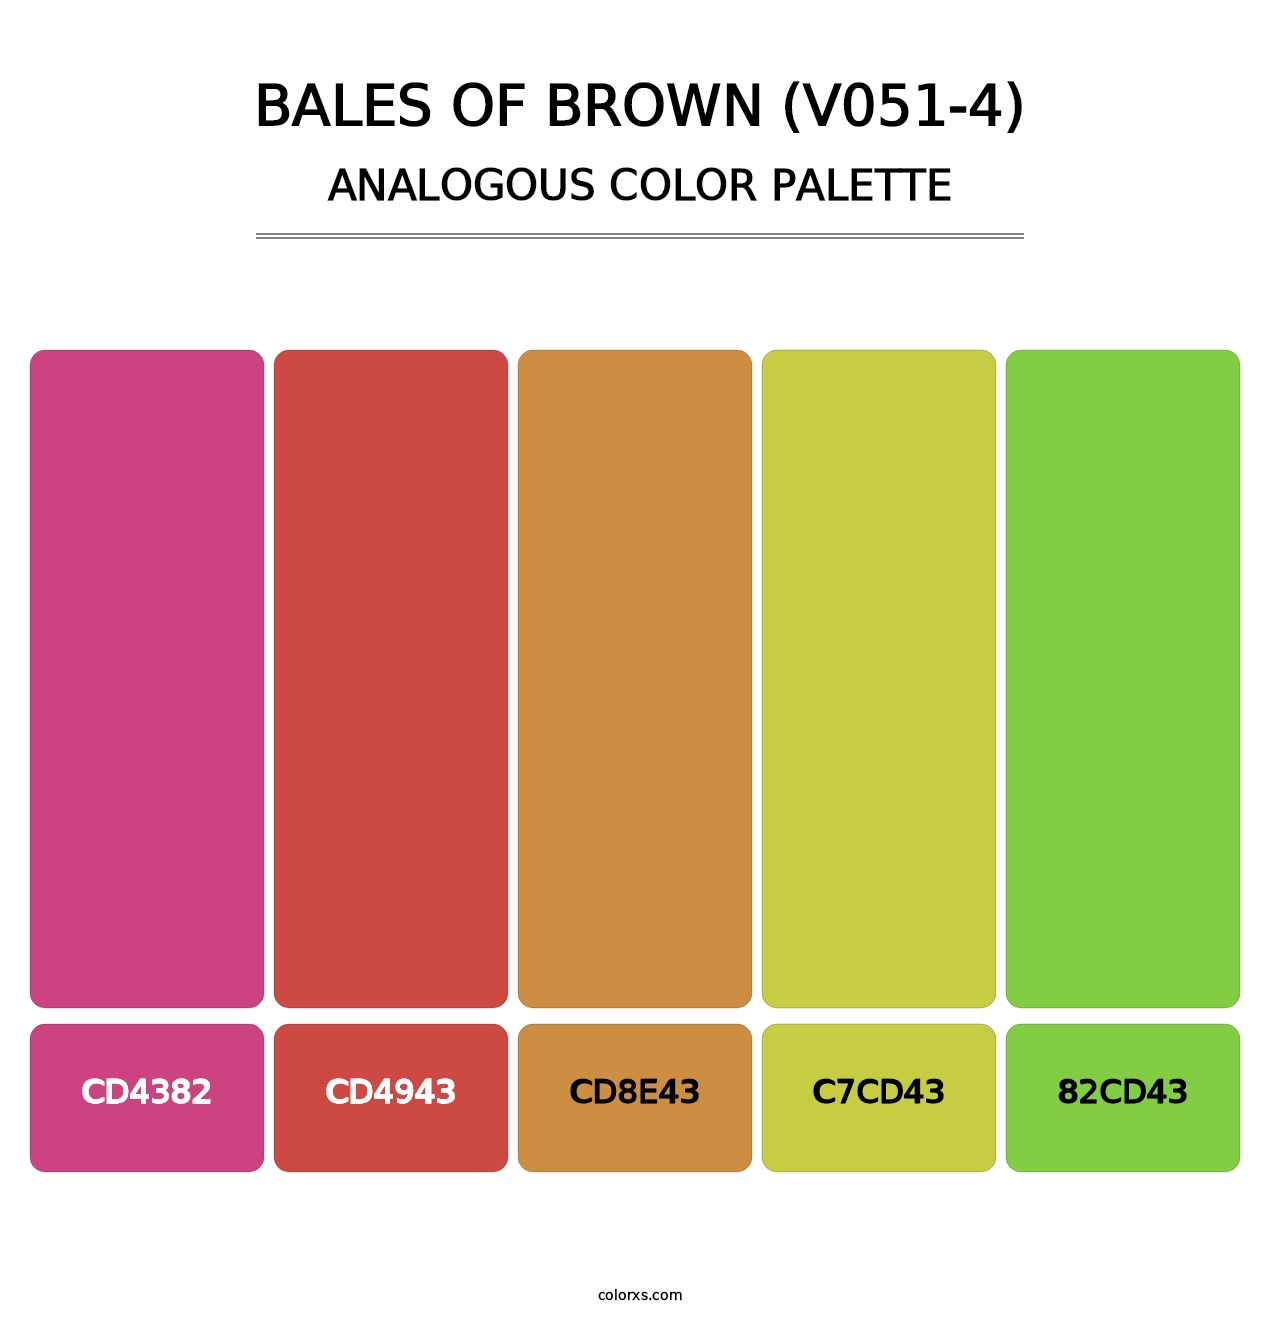 Bales of Brown (V051-4) - Analogous Color Palette